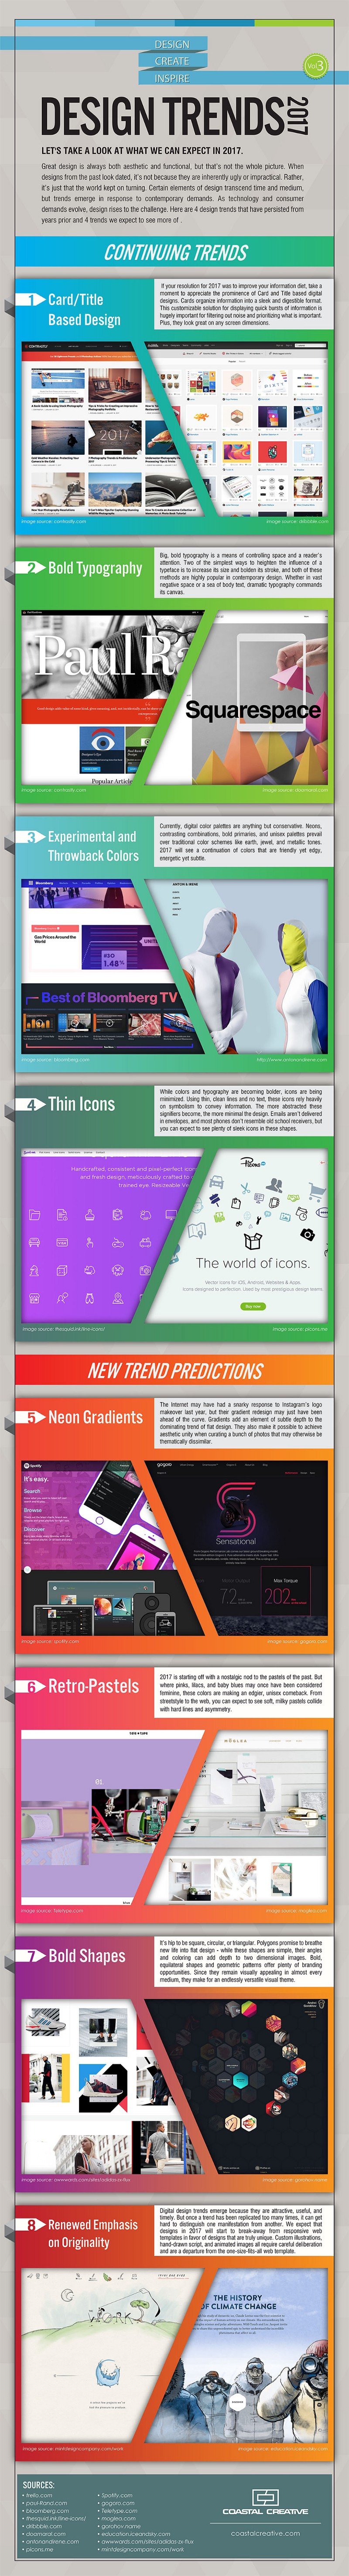 Design Trends 2017 Infographic